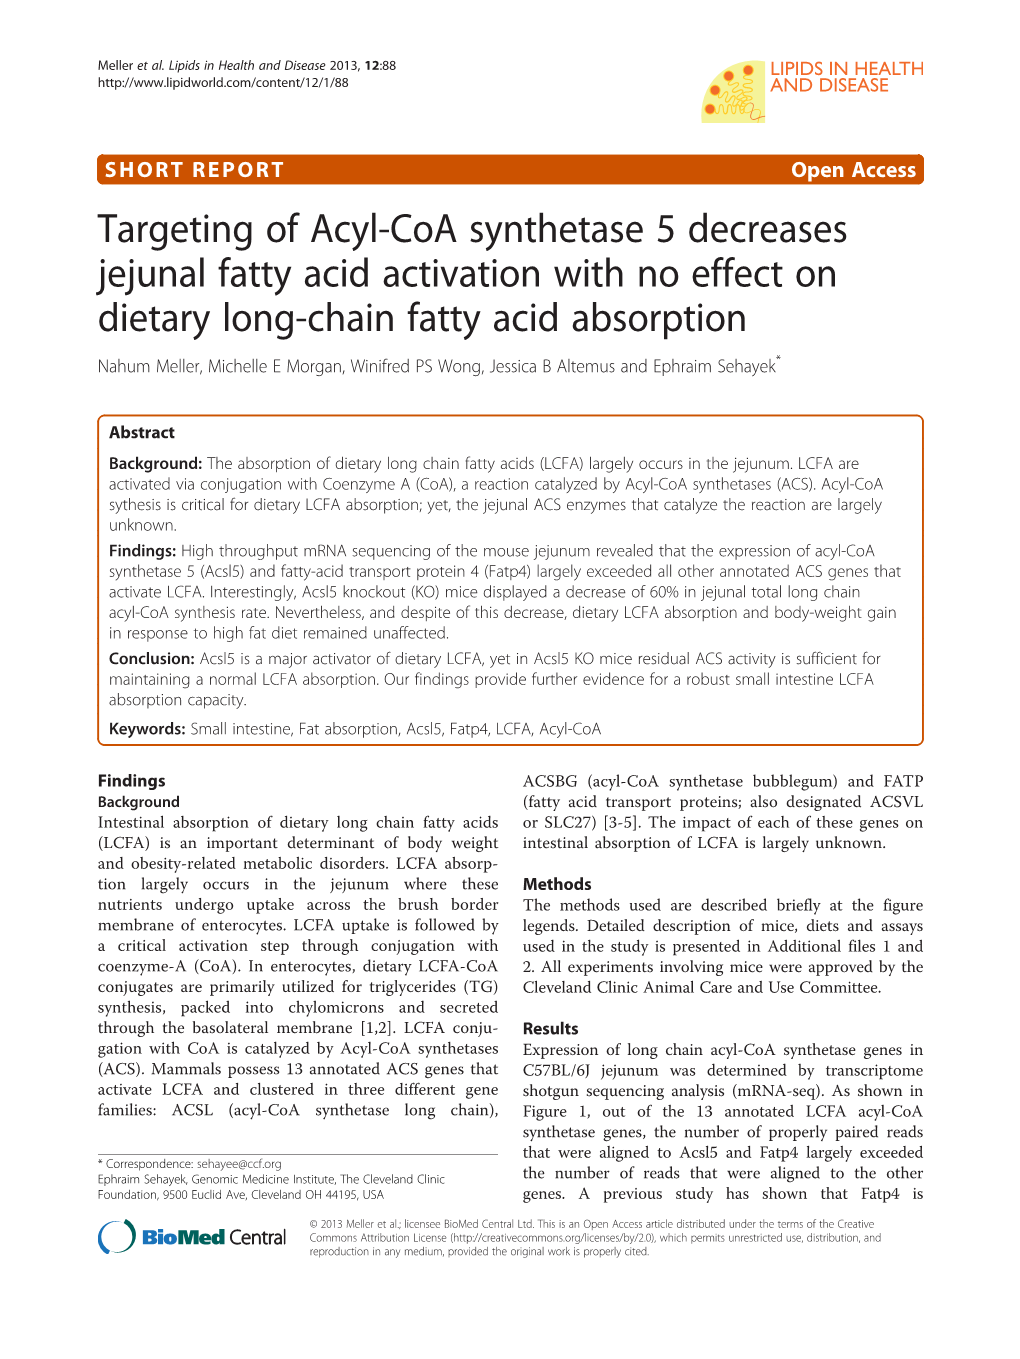 Targeting of Acyl-Coa Synthetase 5